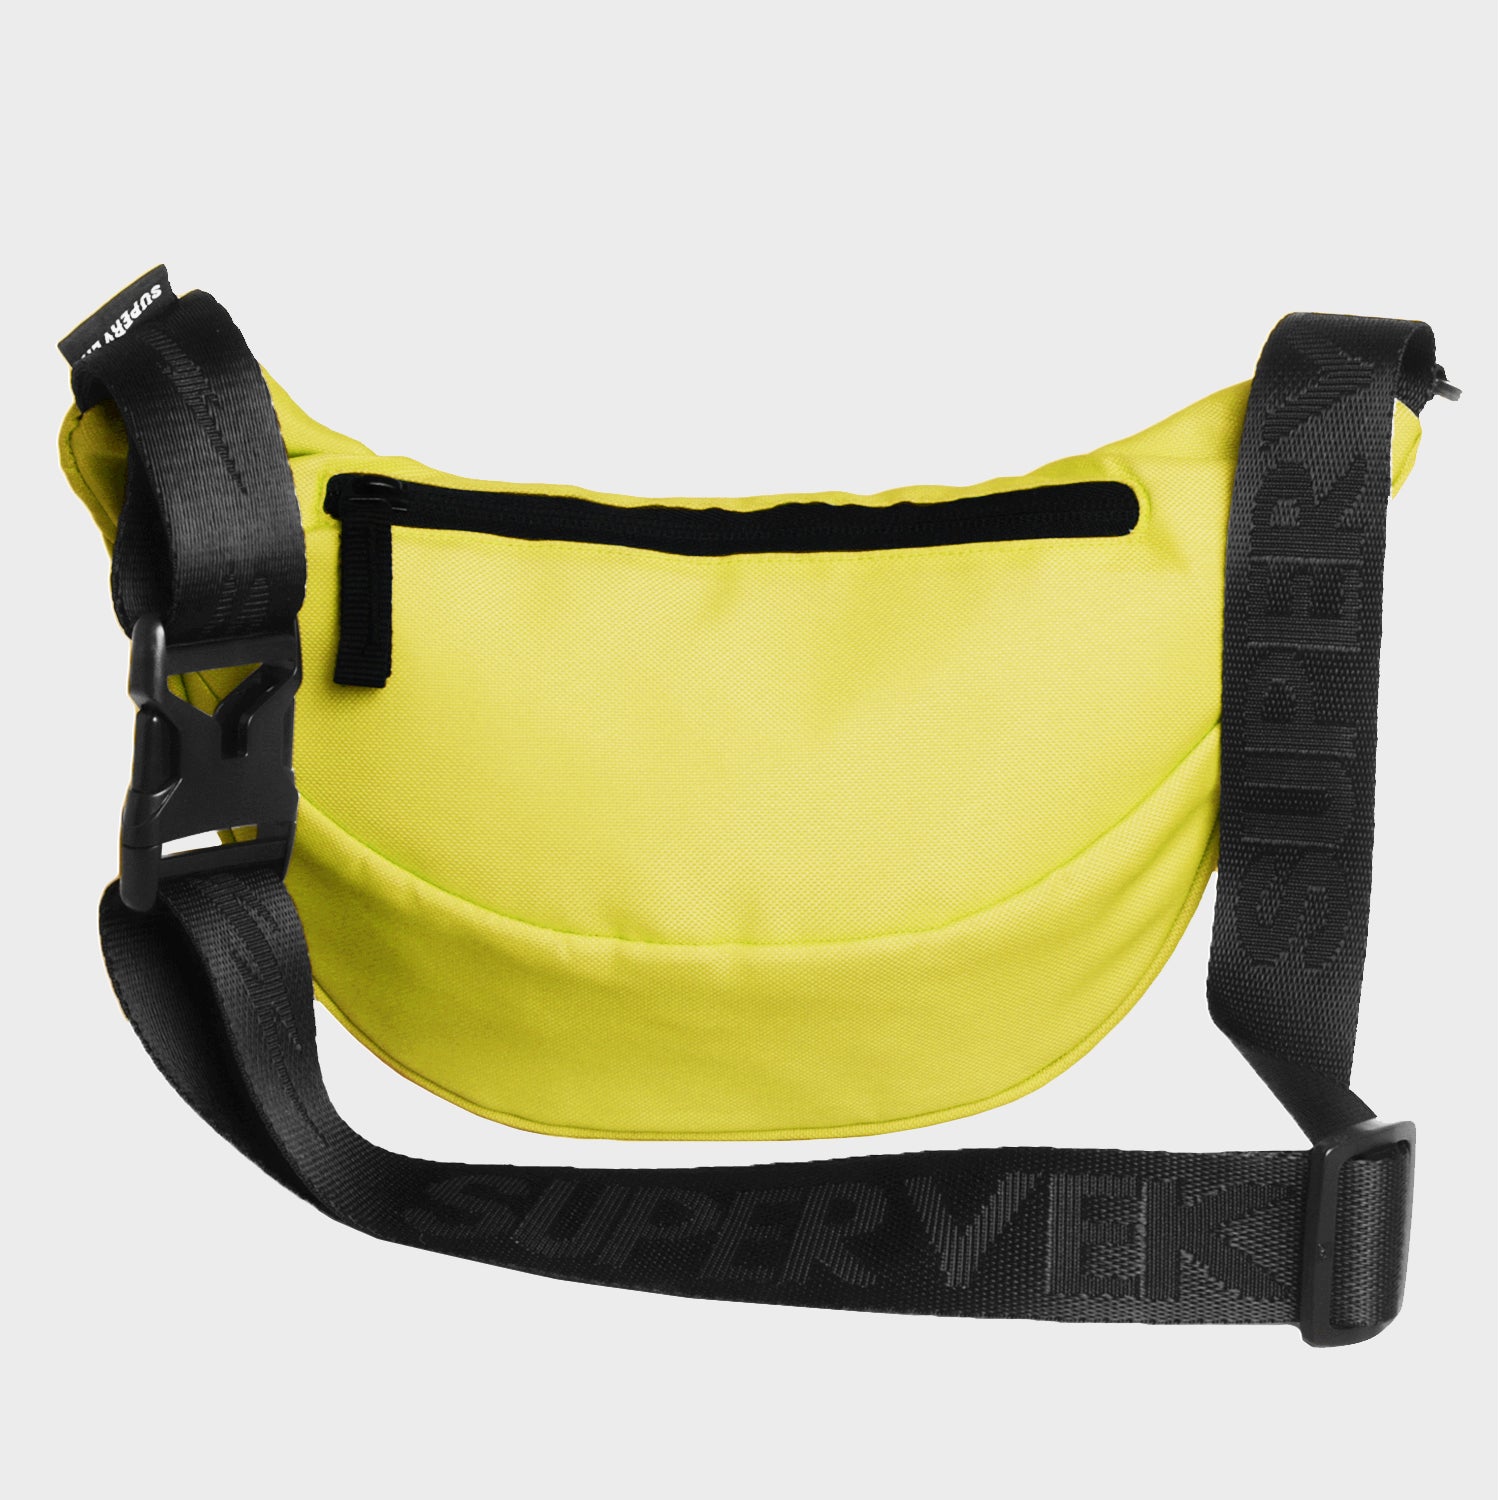 Supervek Crossbody Slinger - Canary Yellow - Urban Functional Fanny Hip Bag for Everyday Essentials - Back